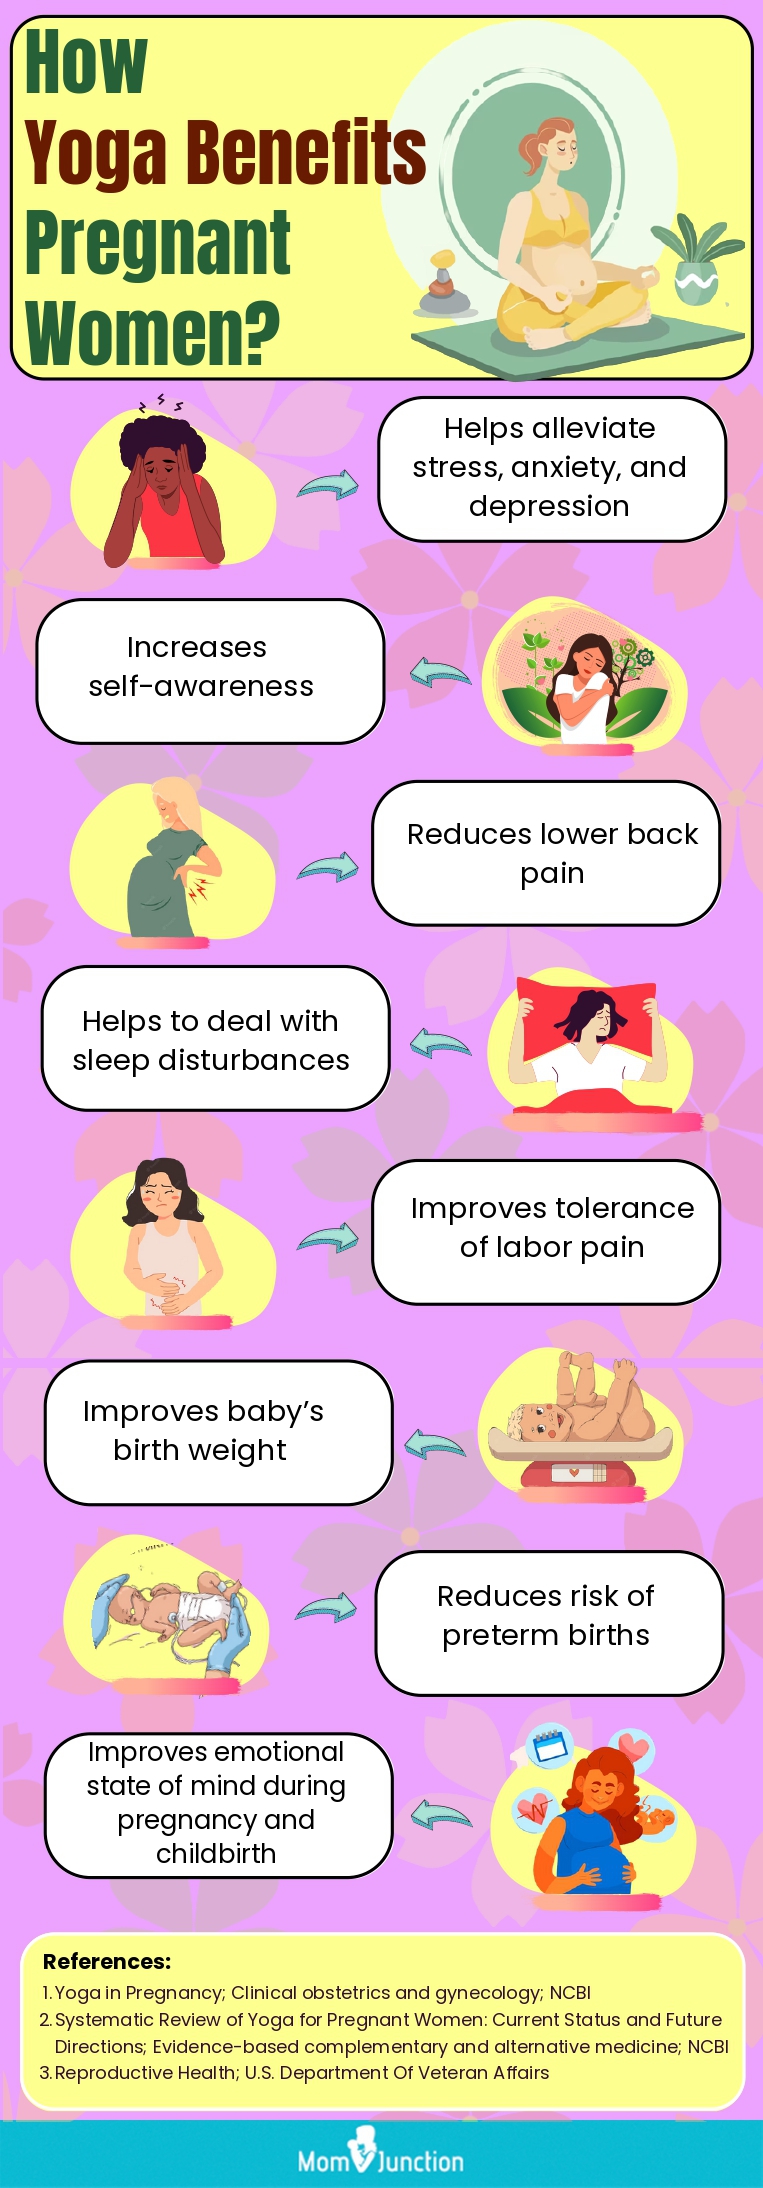 how yoga benefits pregnant women (infographic)